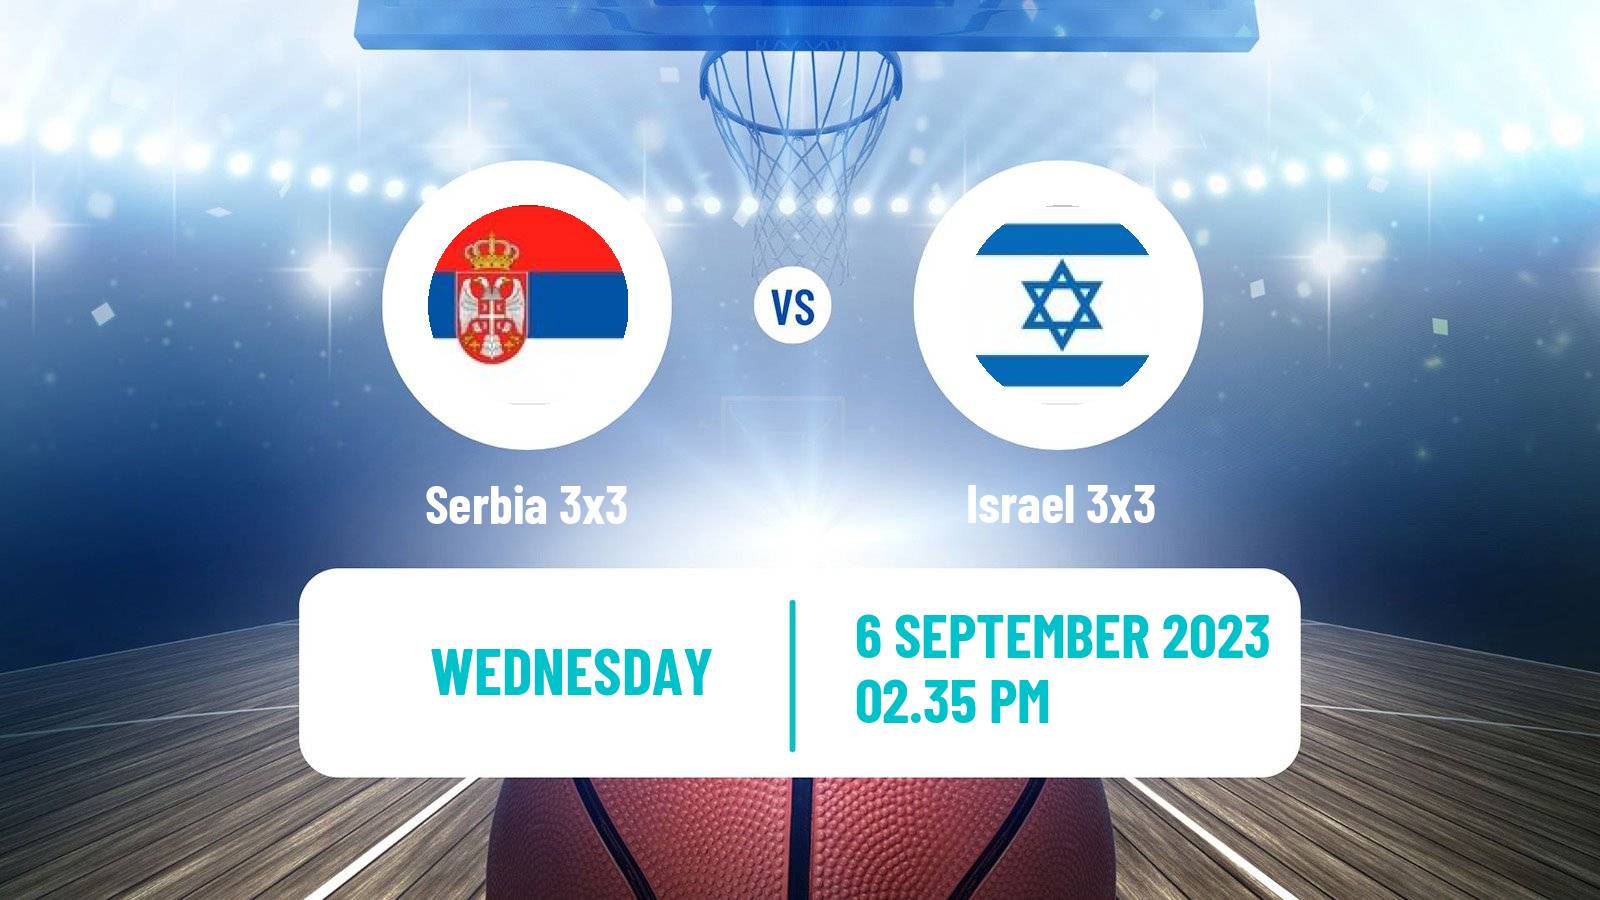 Basketball Europe Cup Basketball 3x3 Serbia 3x3 - Israel 3x3